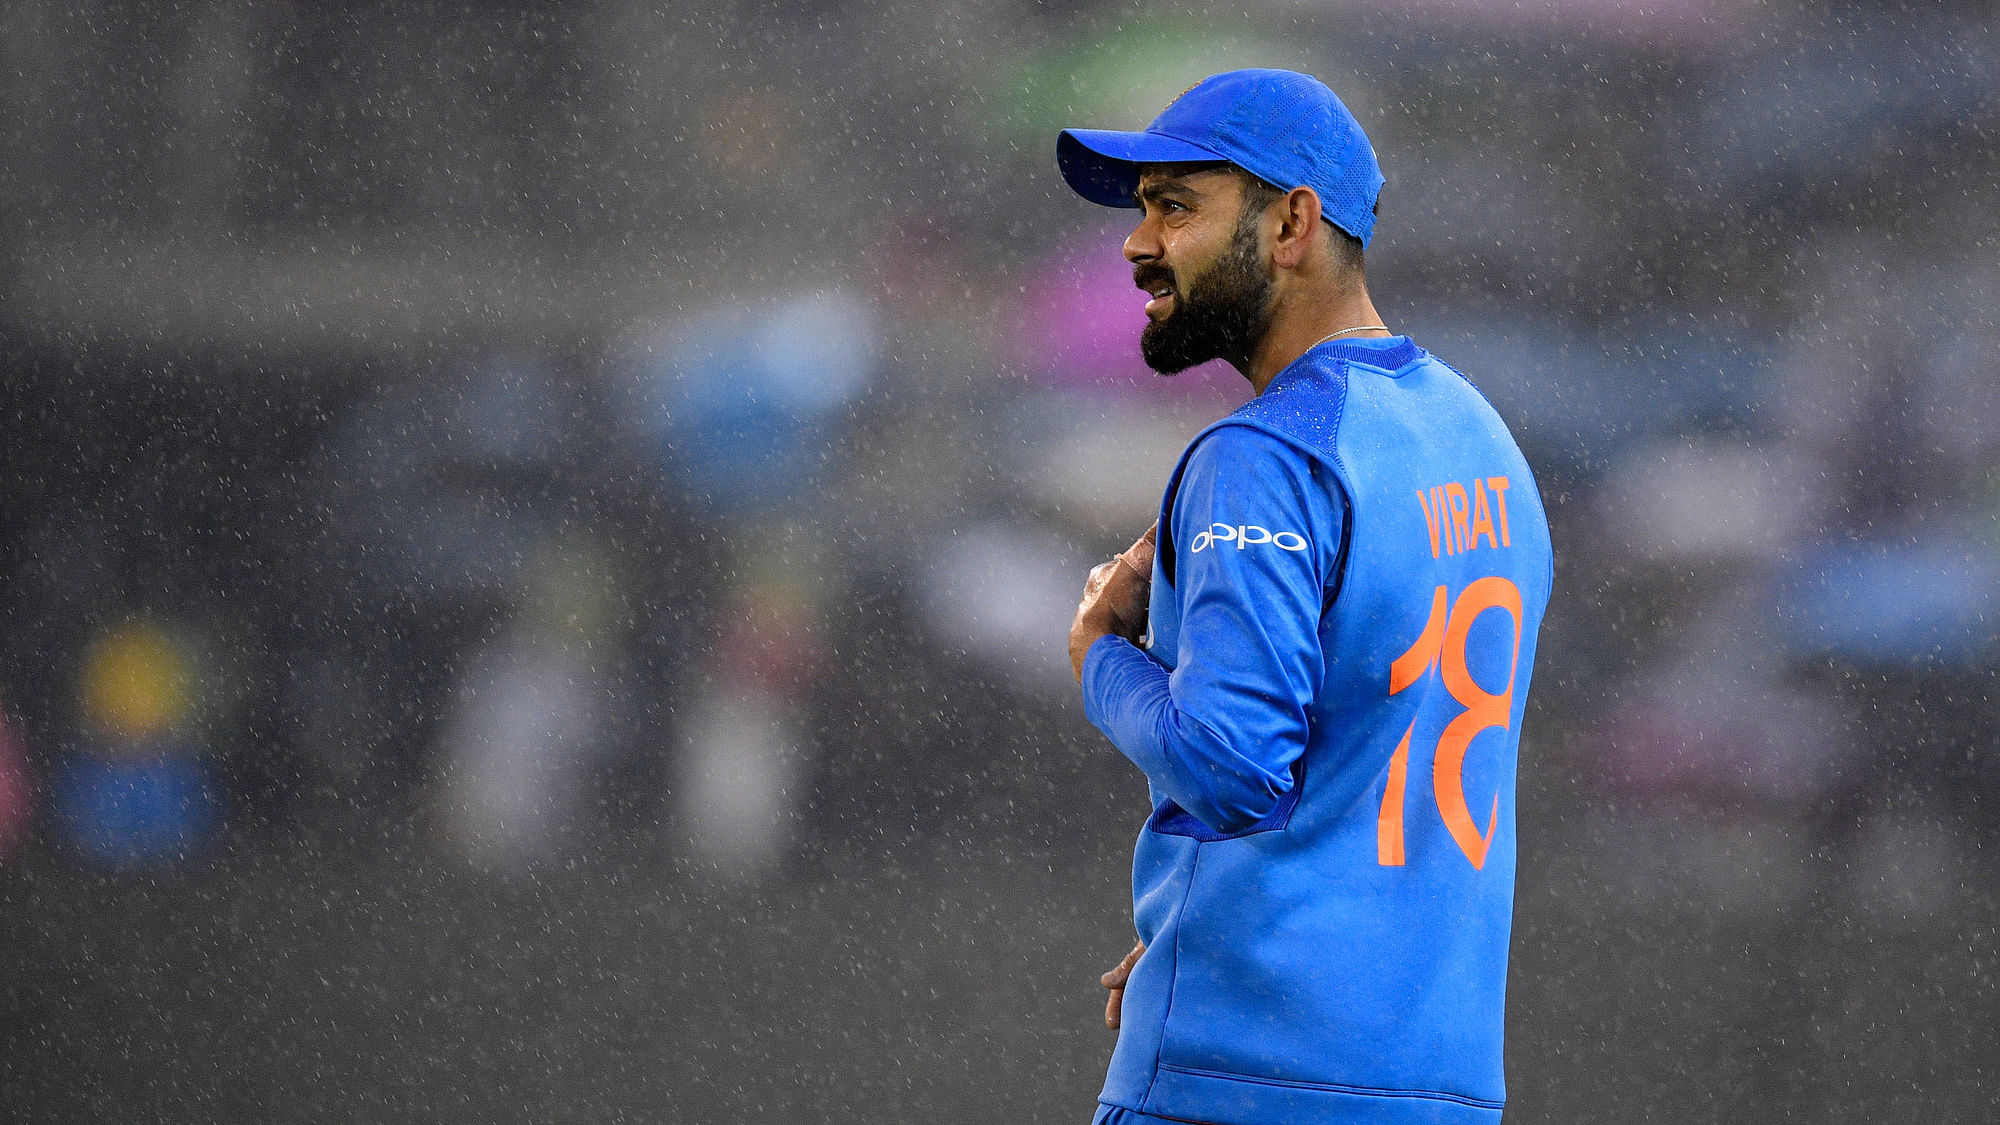 India’s Virat Kohli watches play as the rain falls during the Twenty20 international cricket match between India and Australia in Melbourne, Australia.